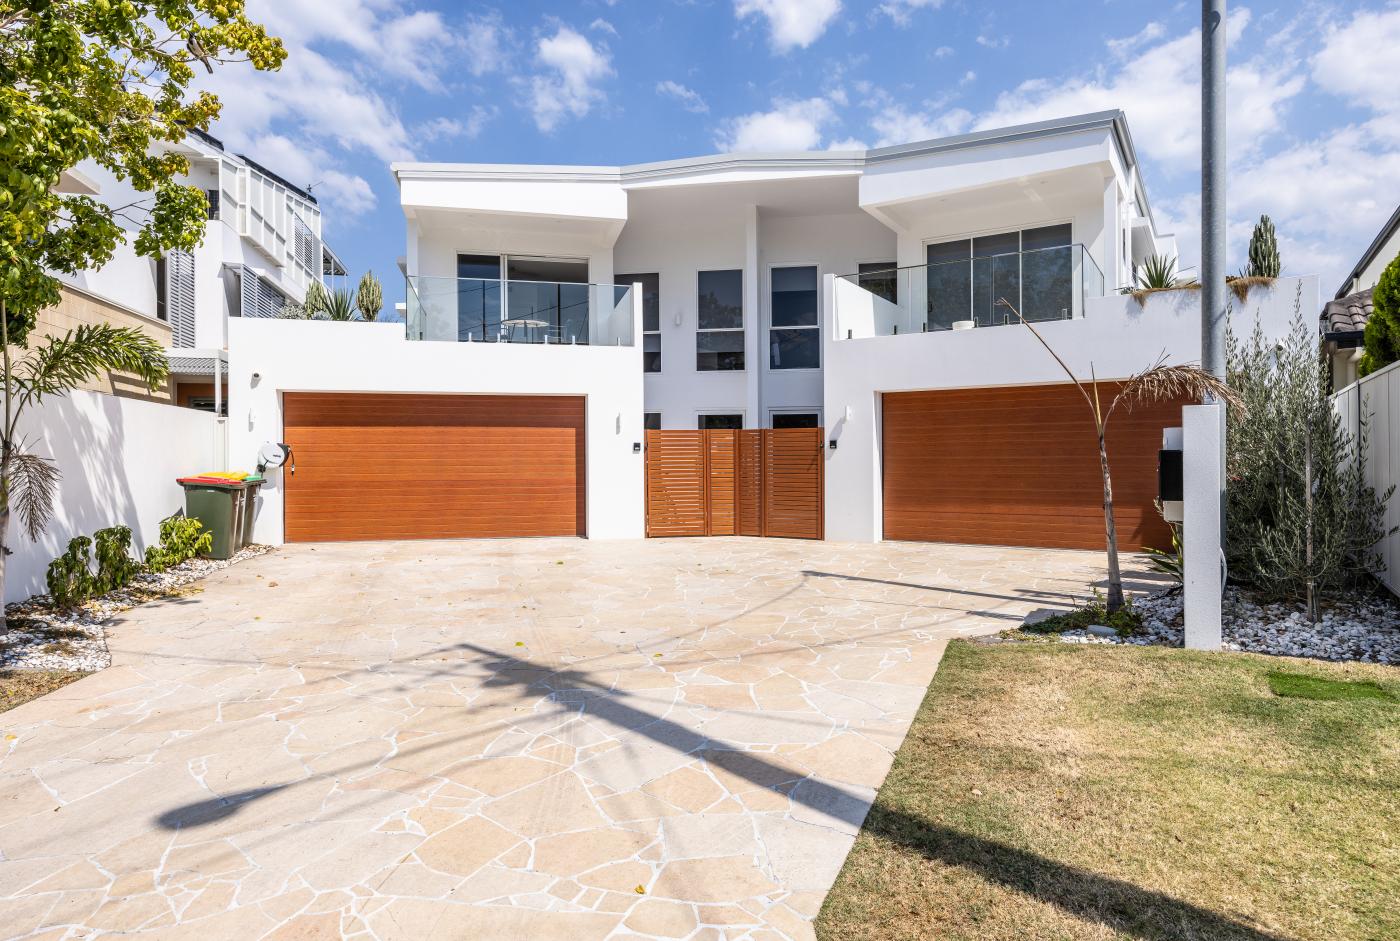 M-Motion Real Estate Agency, 25 Inga Avenue Surfers Paradise Gold Coast, Michael Mahon Lauren Mahon Best Real Estate Agent